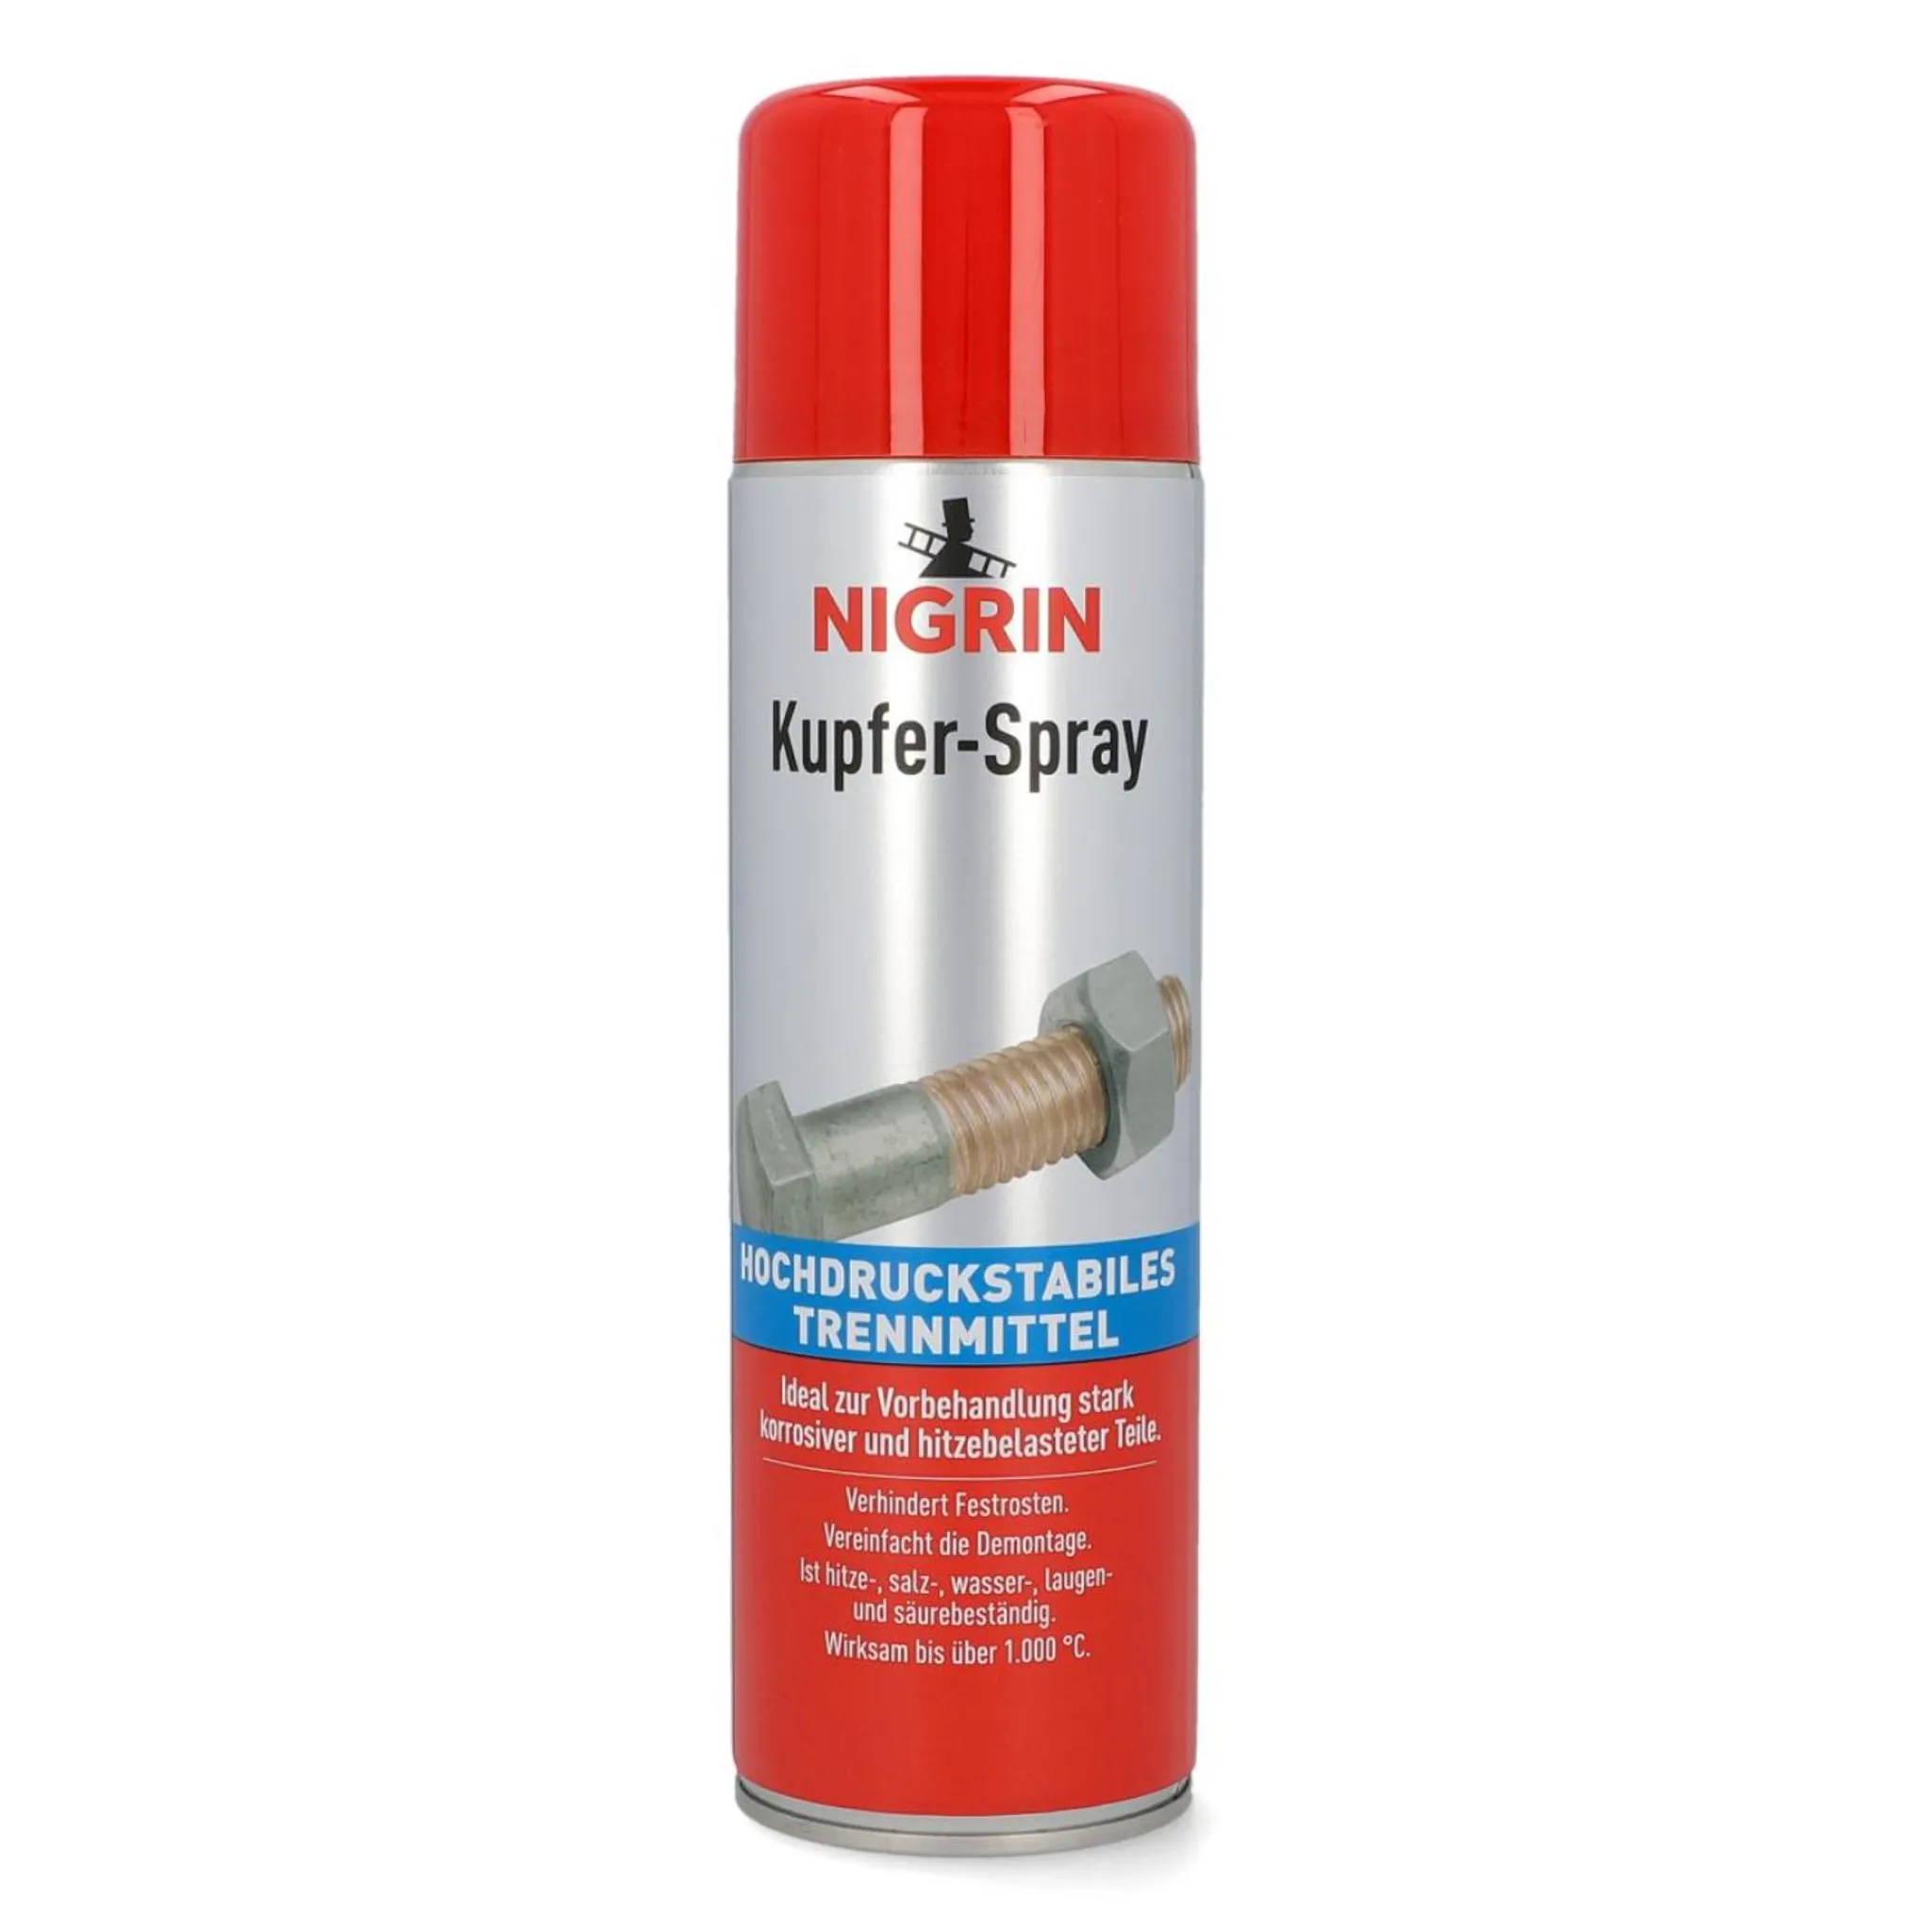 NIGRIN Kupfer-Spray 500ml - Hochdruckstabiles